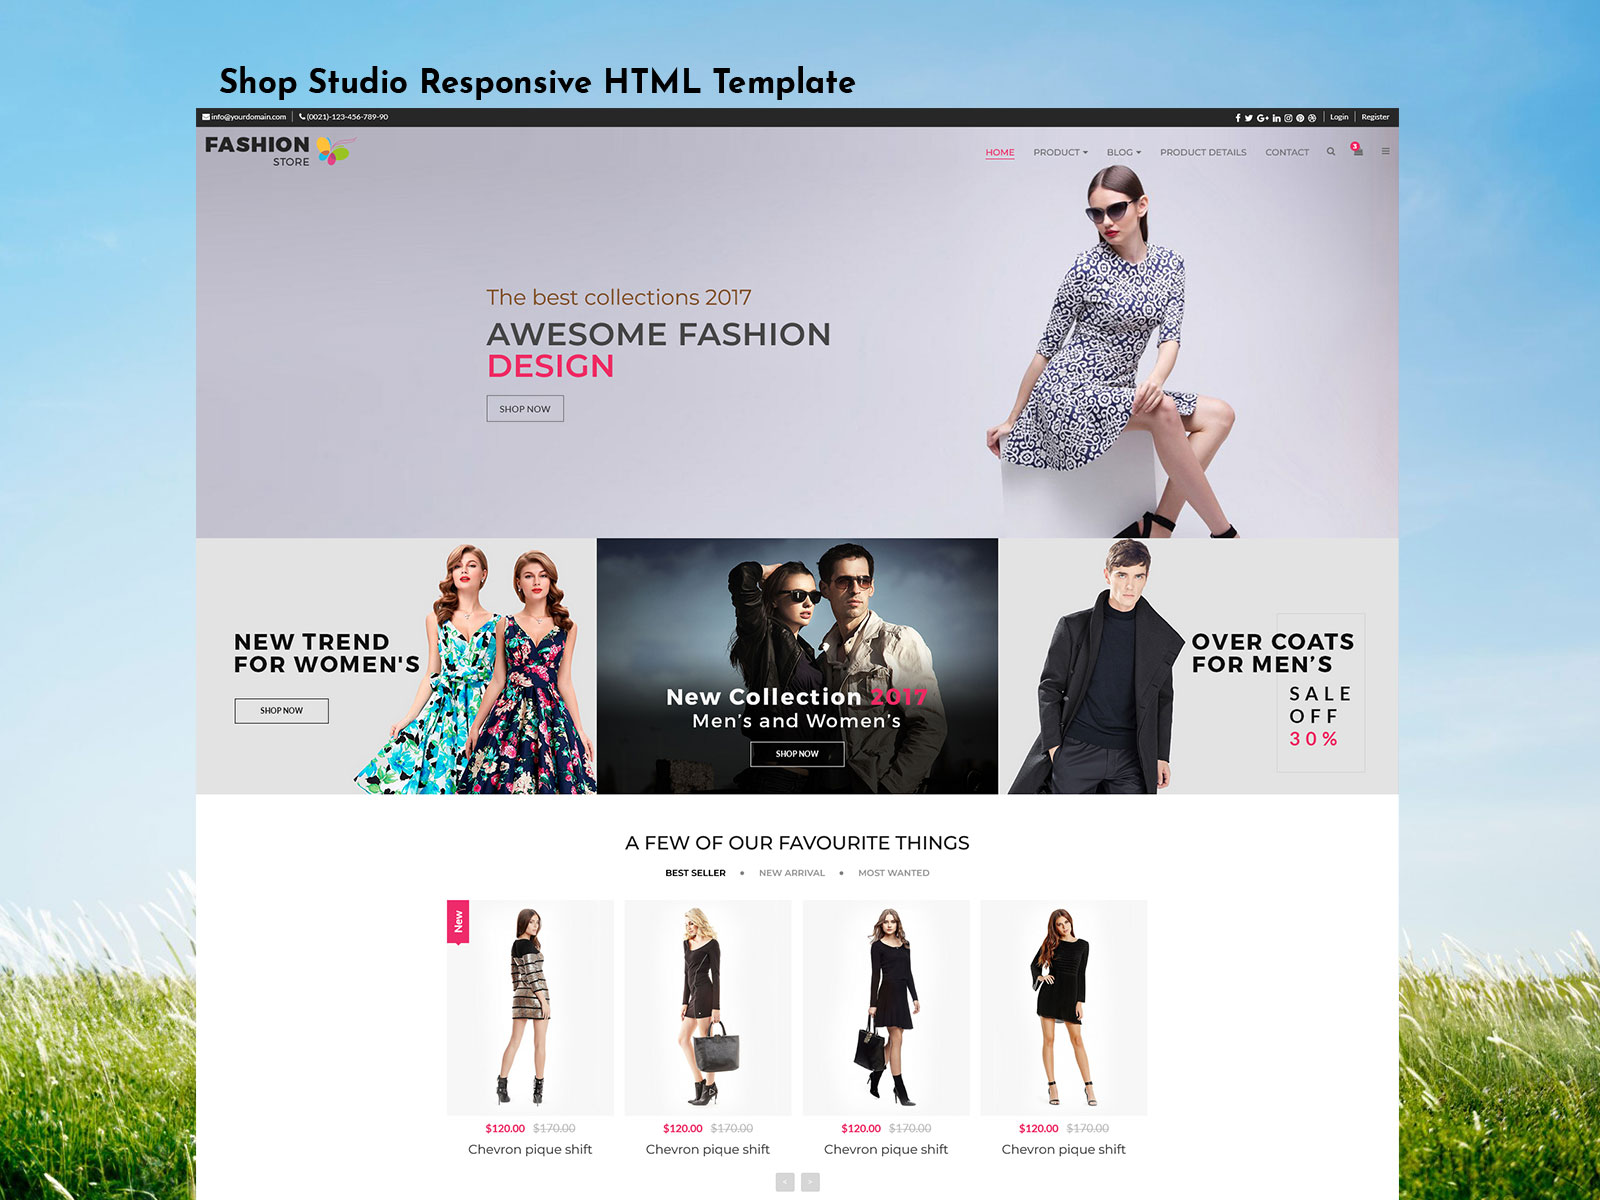 Shop Studio – Responsive HTML Template For Shopping Website